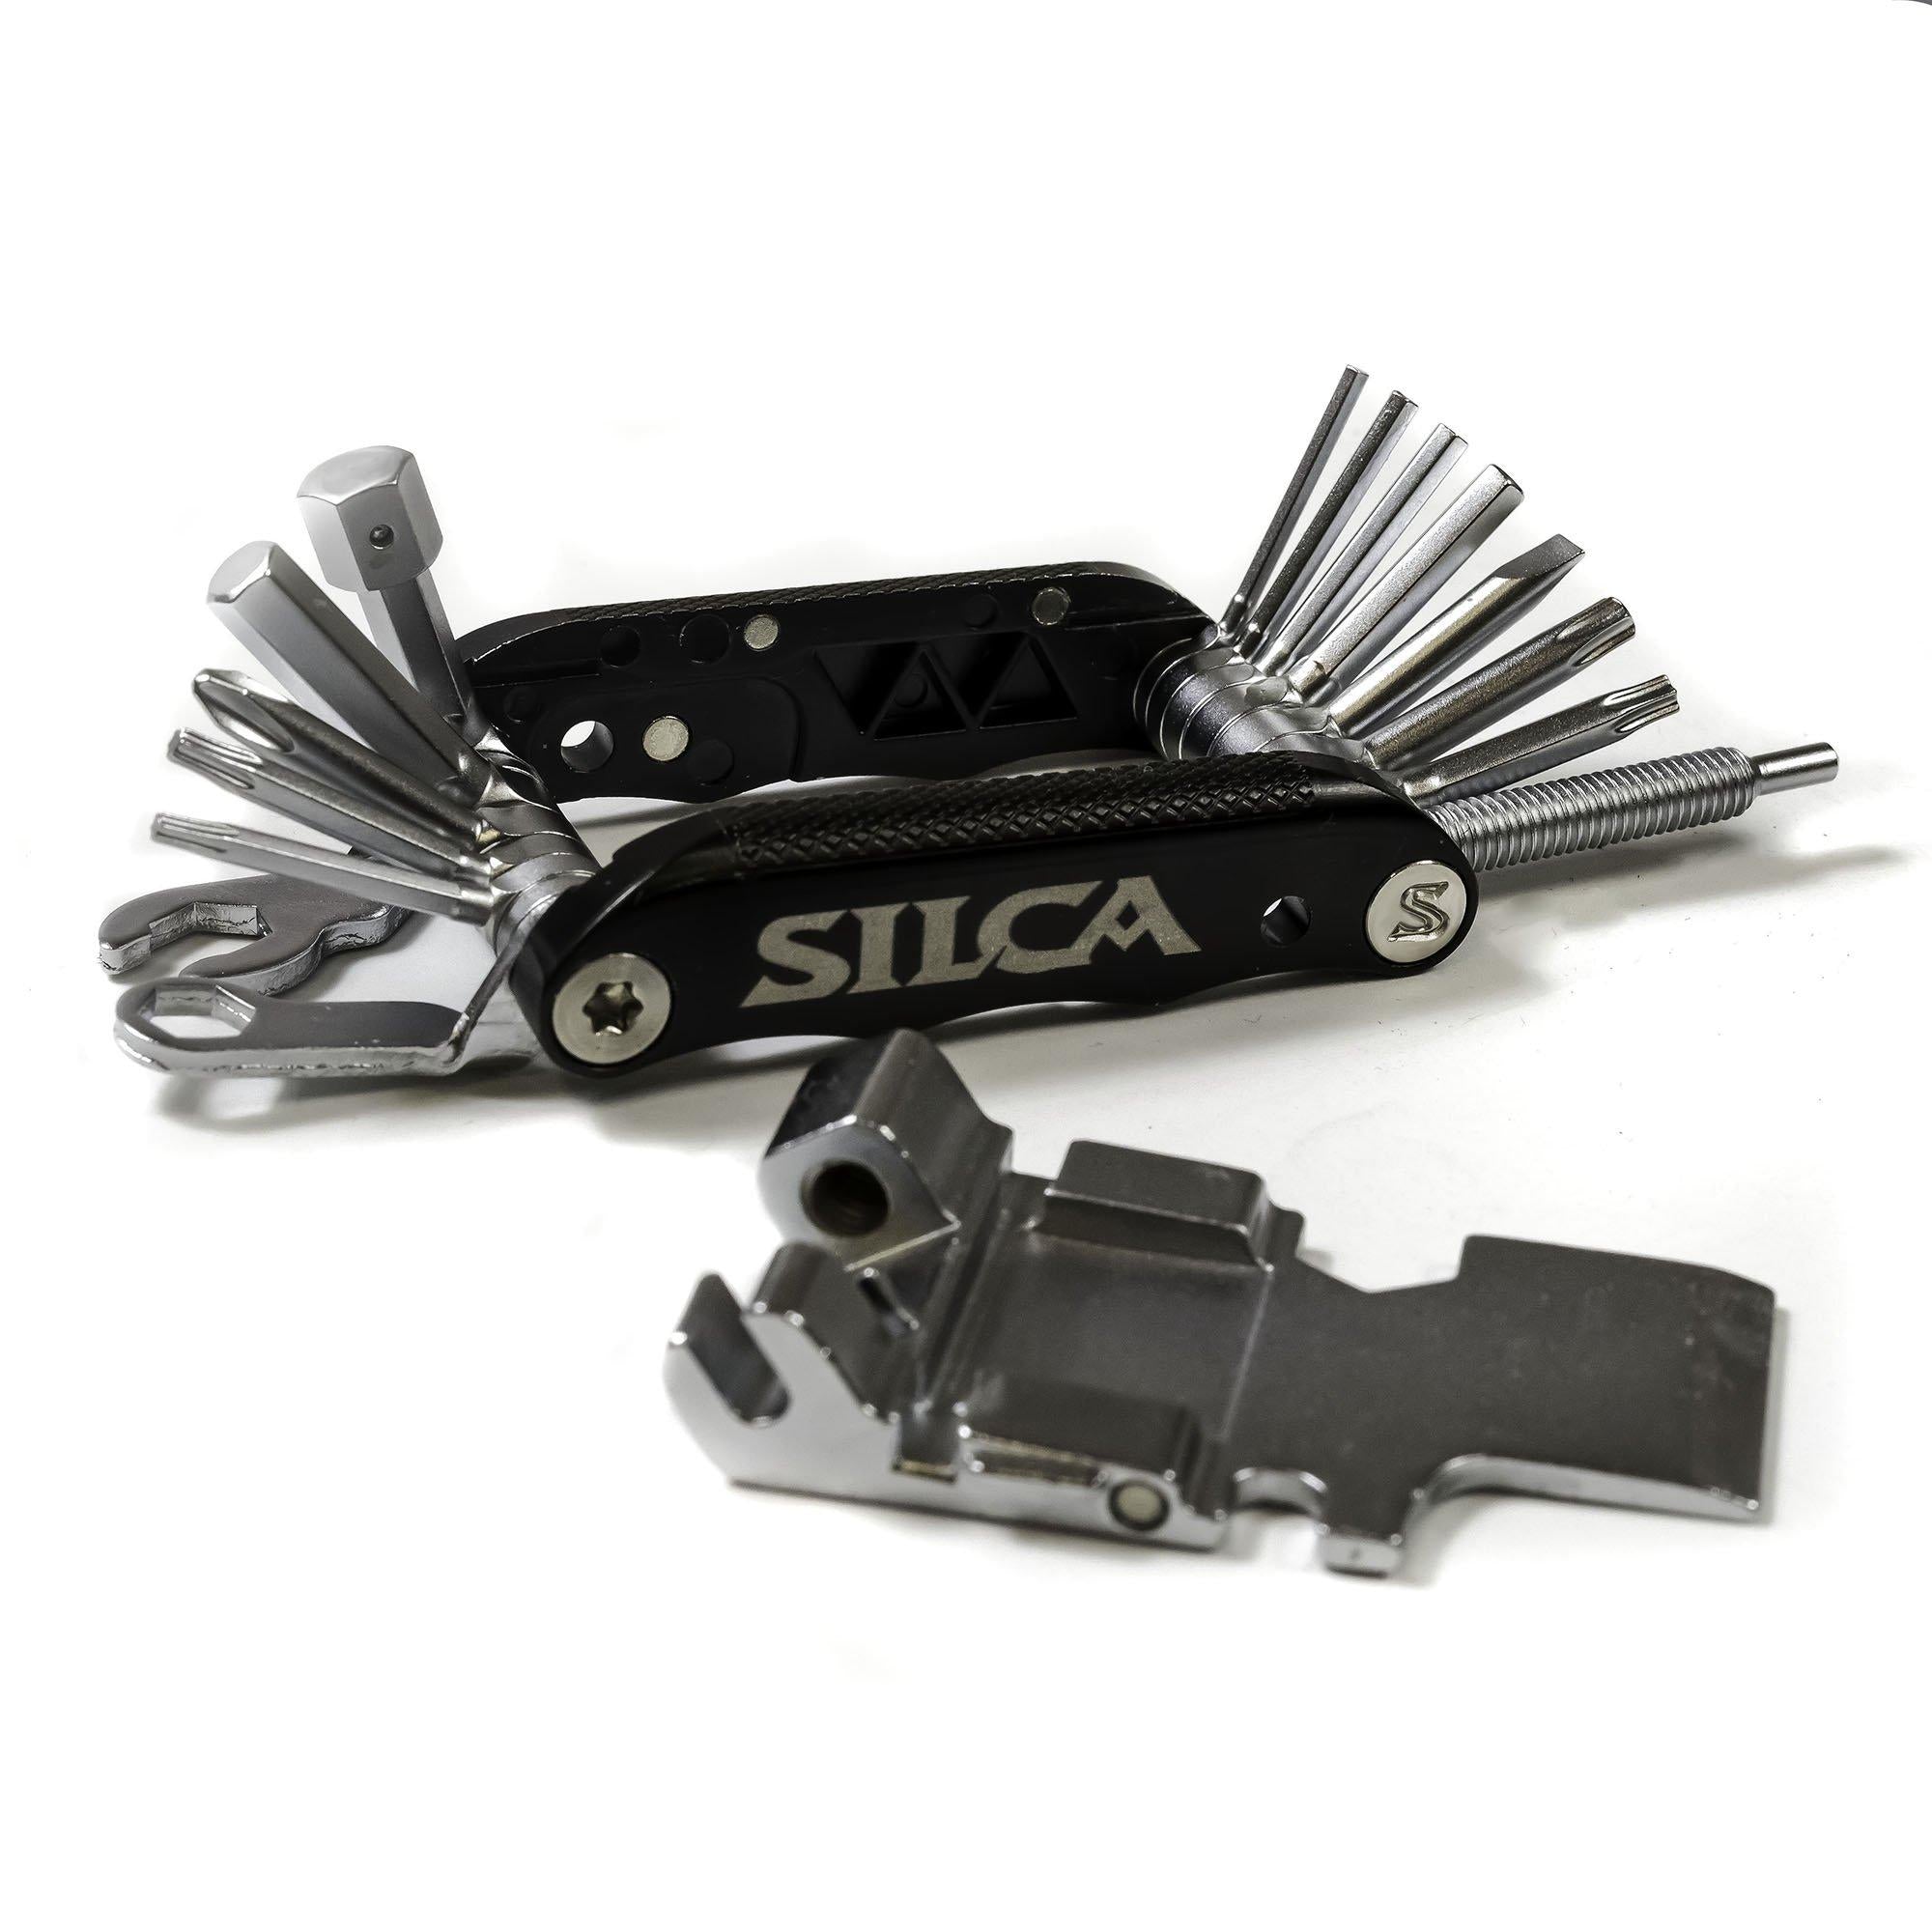 silca-italian-army-knife-venti-20-function